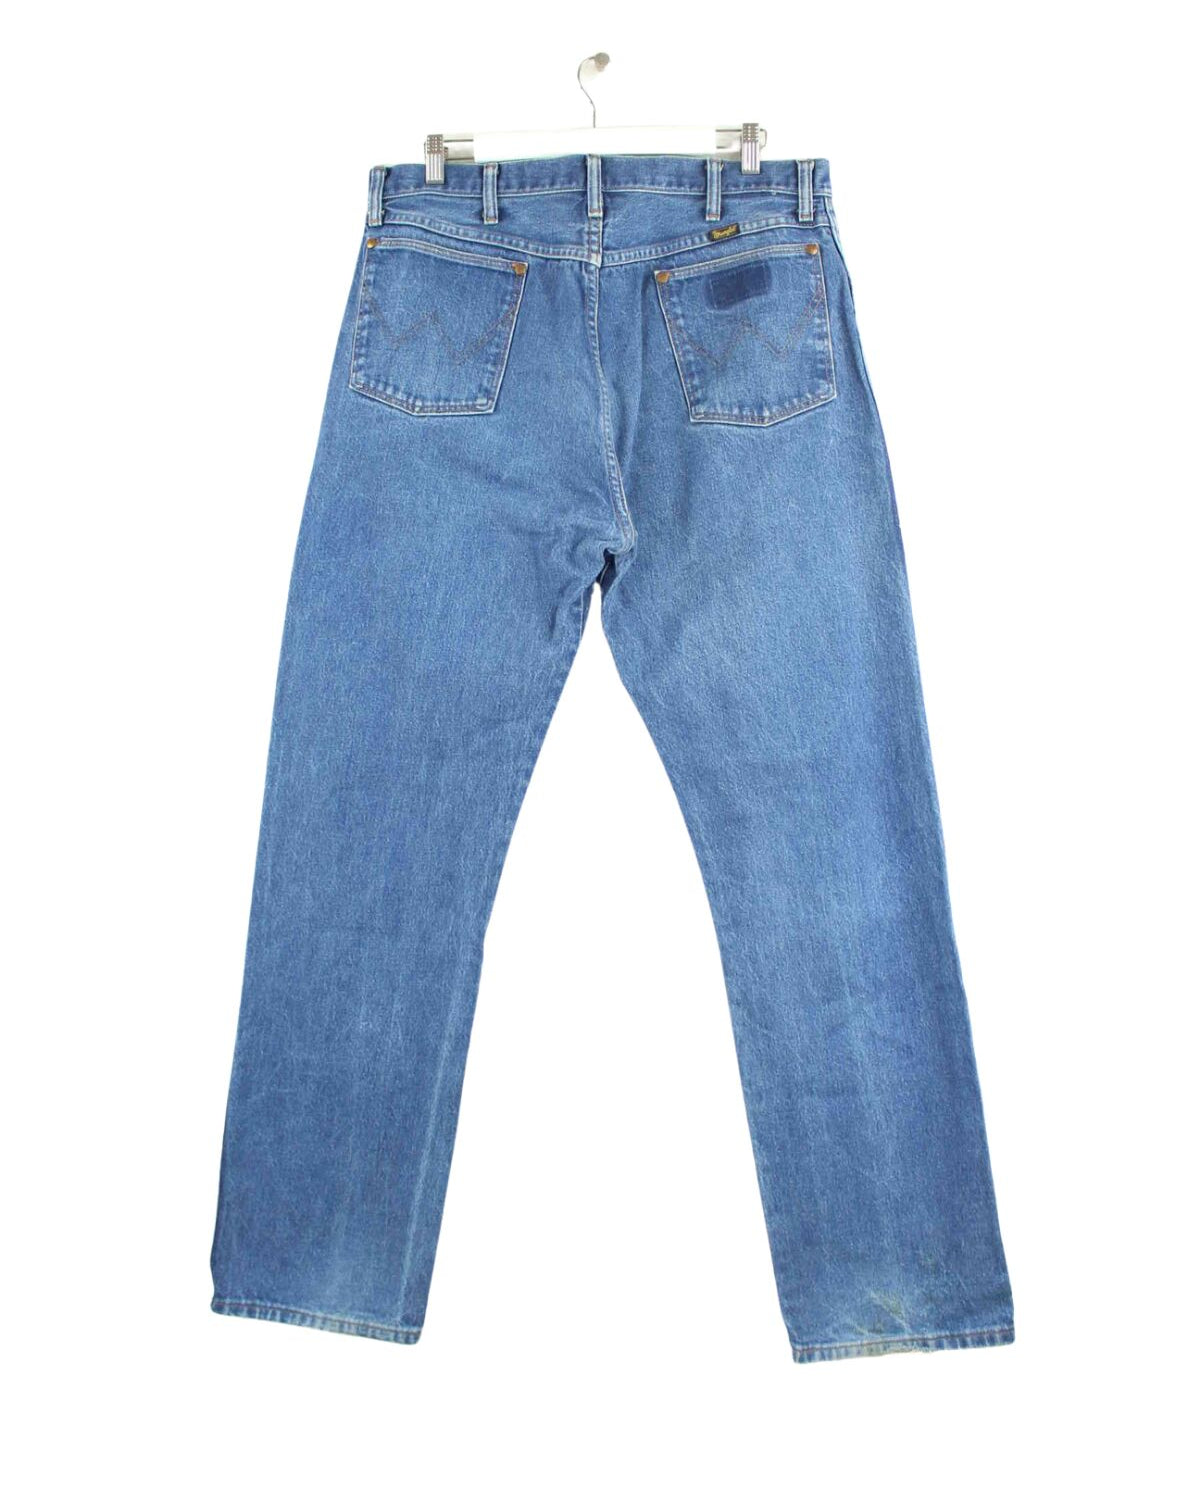 Wrangler 13MWZ 90s Vintage Jeans Blau W38 L34 (back image)